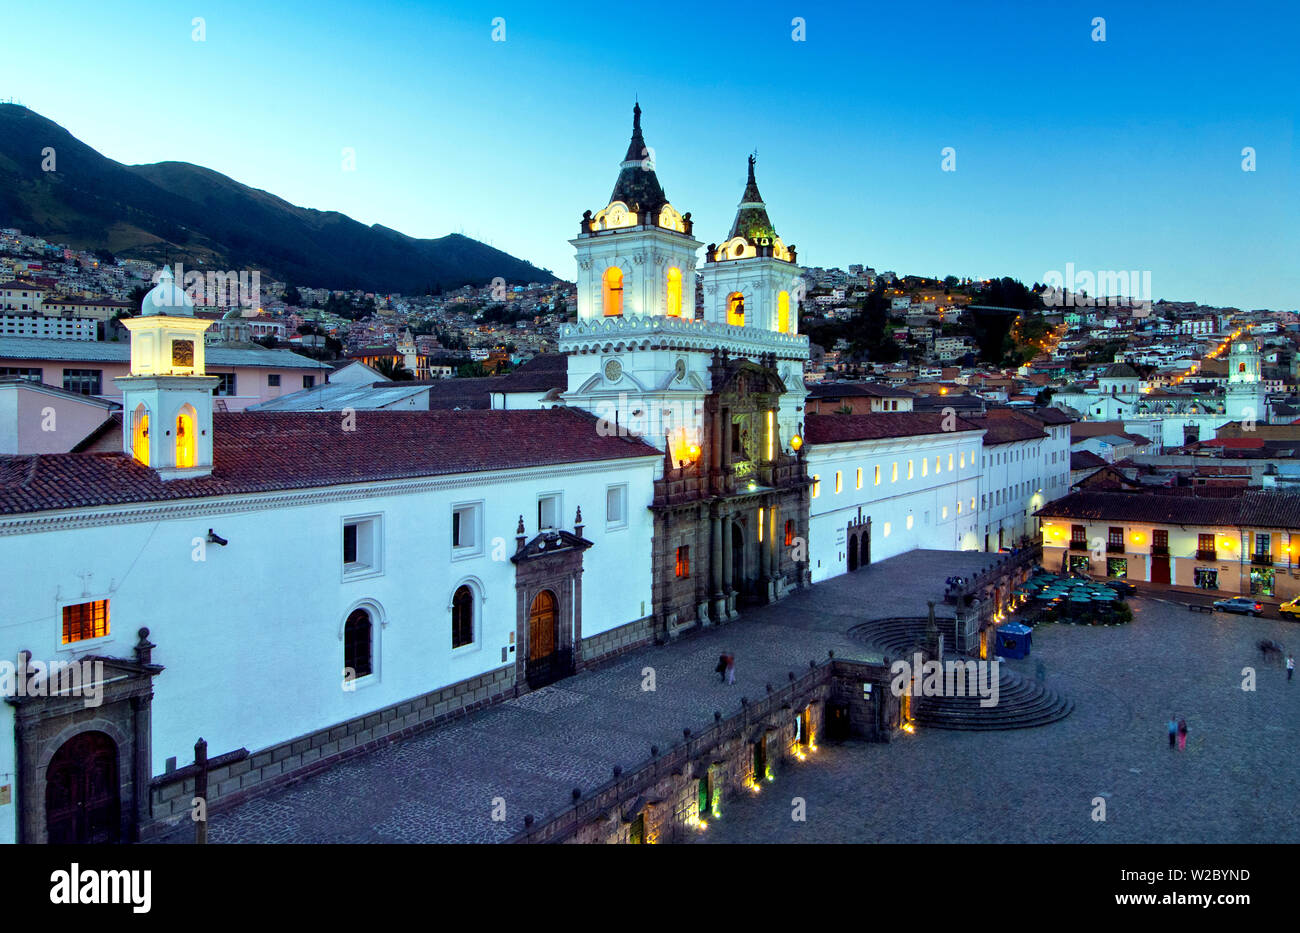 San Francisco Church And Monastery, 16th Century, Old Town, Centro Historico, UNESCO World Cultural Heritage Site, San Francisco Plaza, Quito, Ecuador Stock Photo